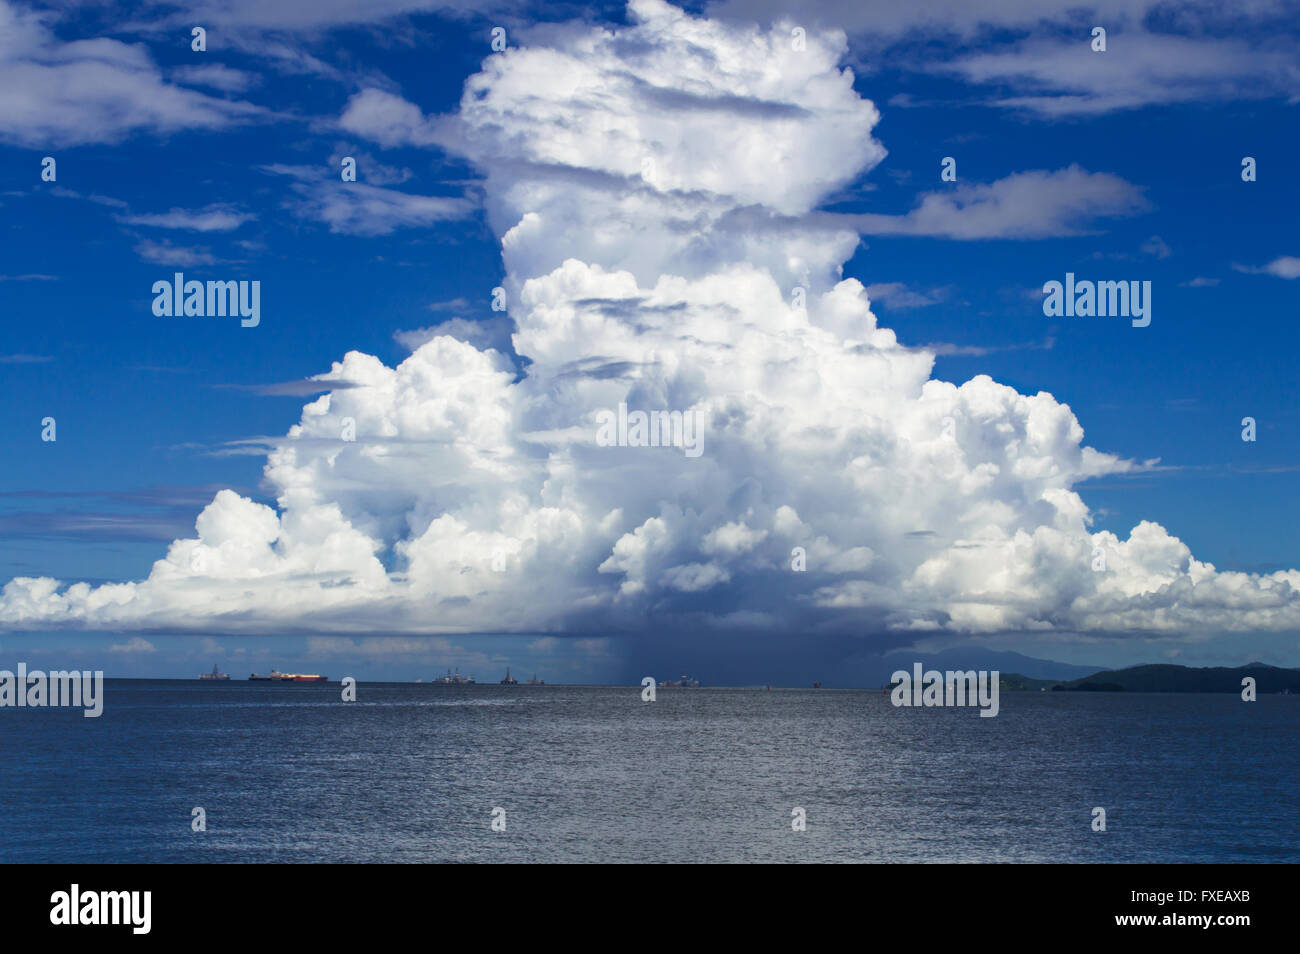 Mushroom cloud over the ocean Stock Photo